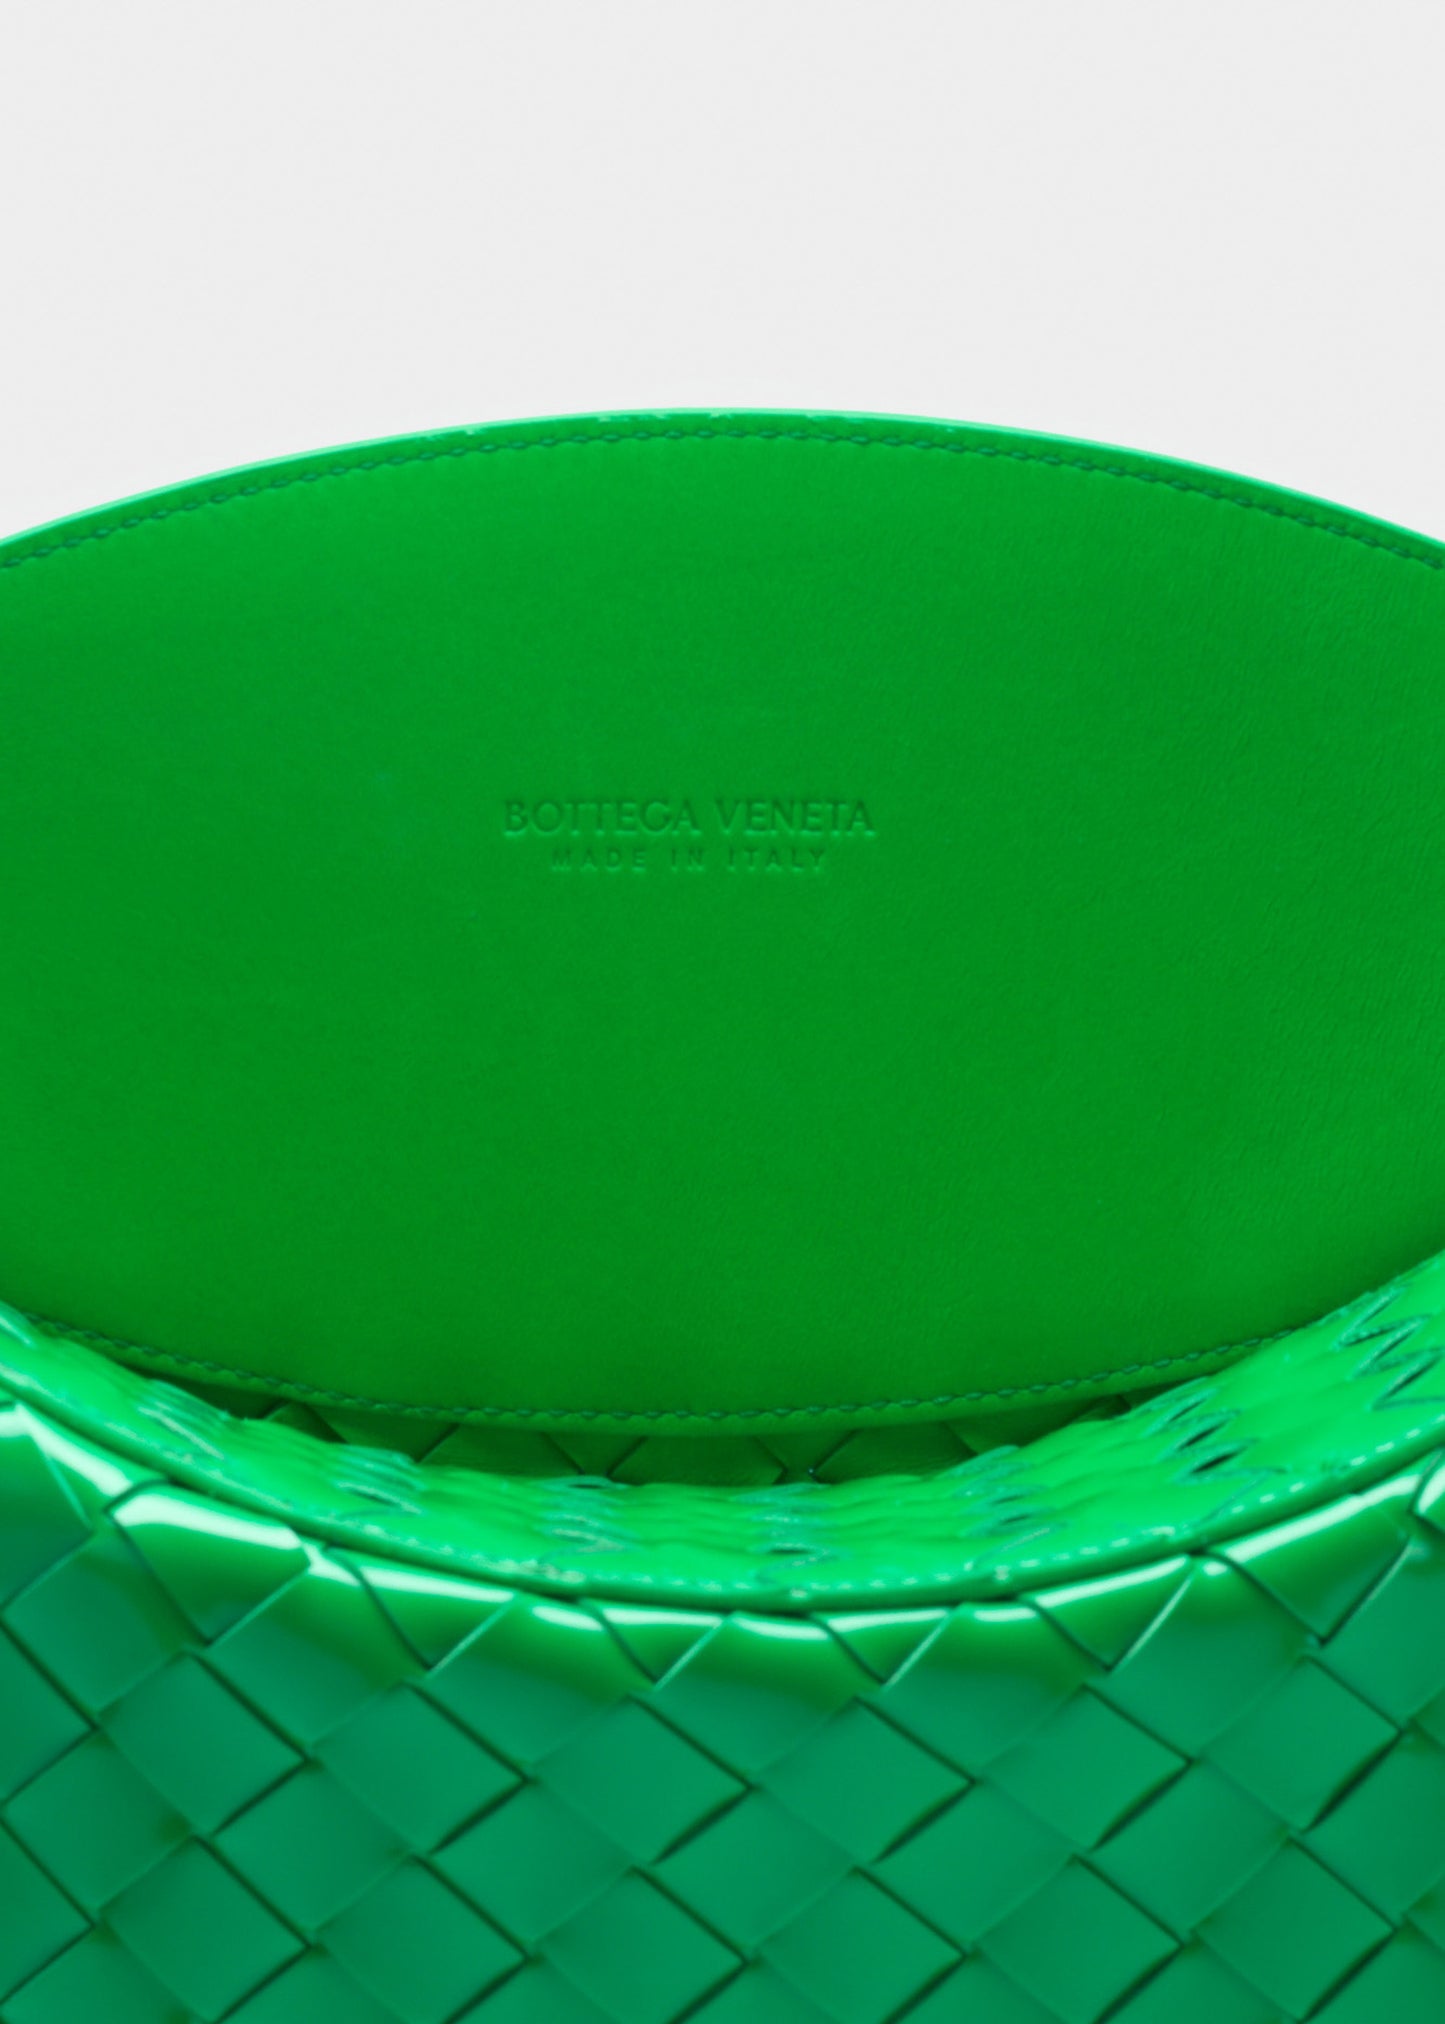 Bottega Veneta Green Flap Bag